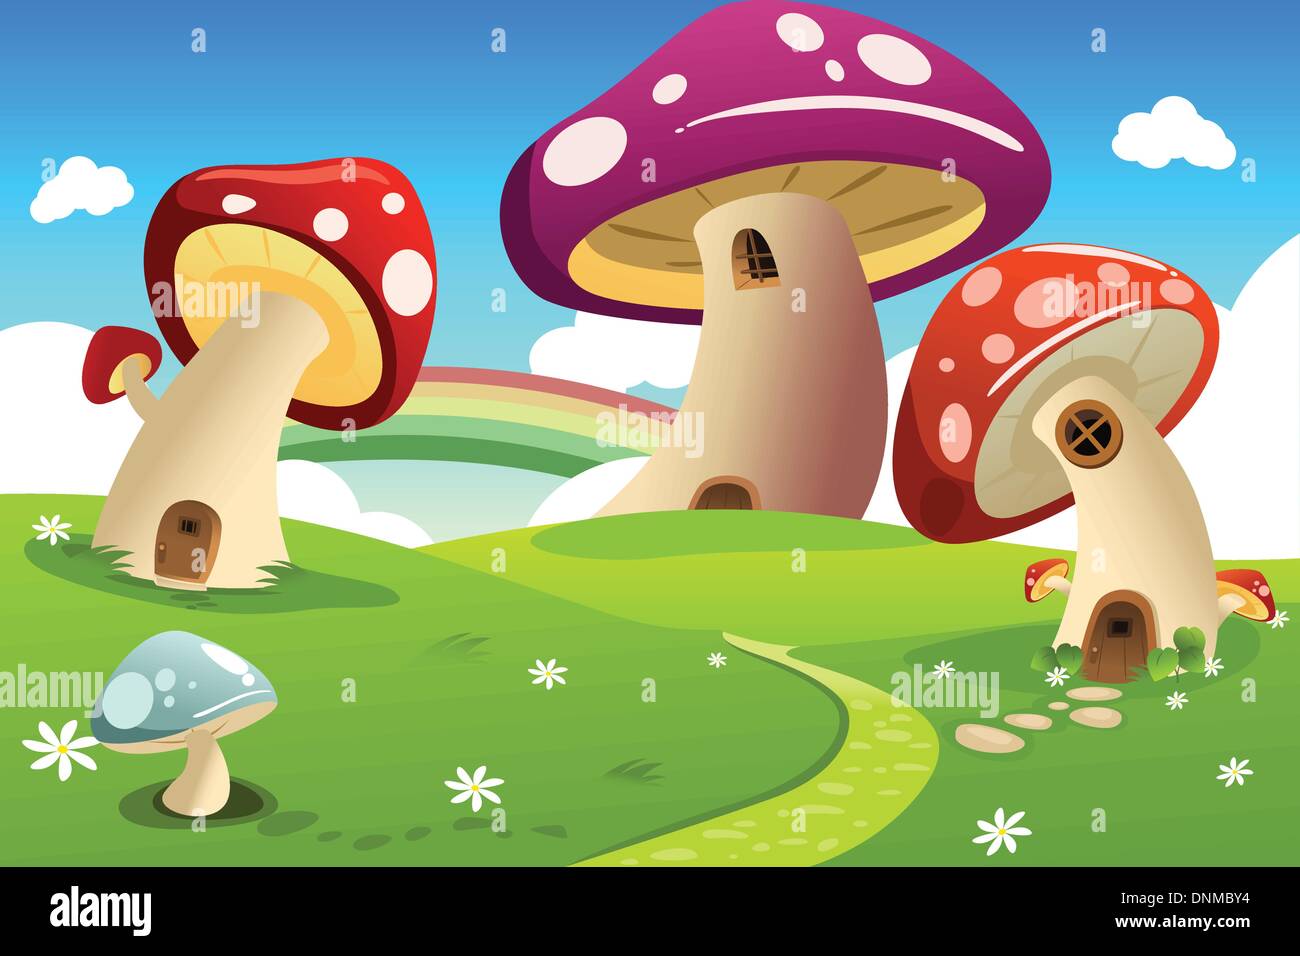 Un vecteur illustration de fantasy de champignons house Illustration de Vecteur